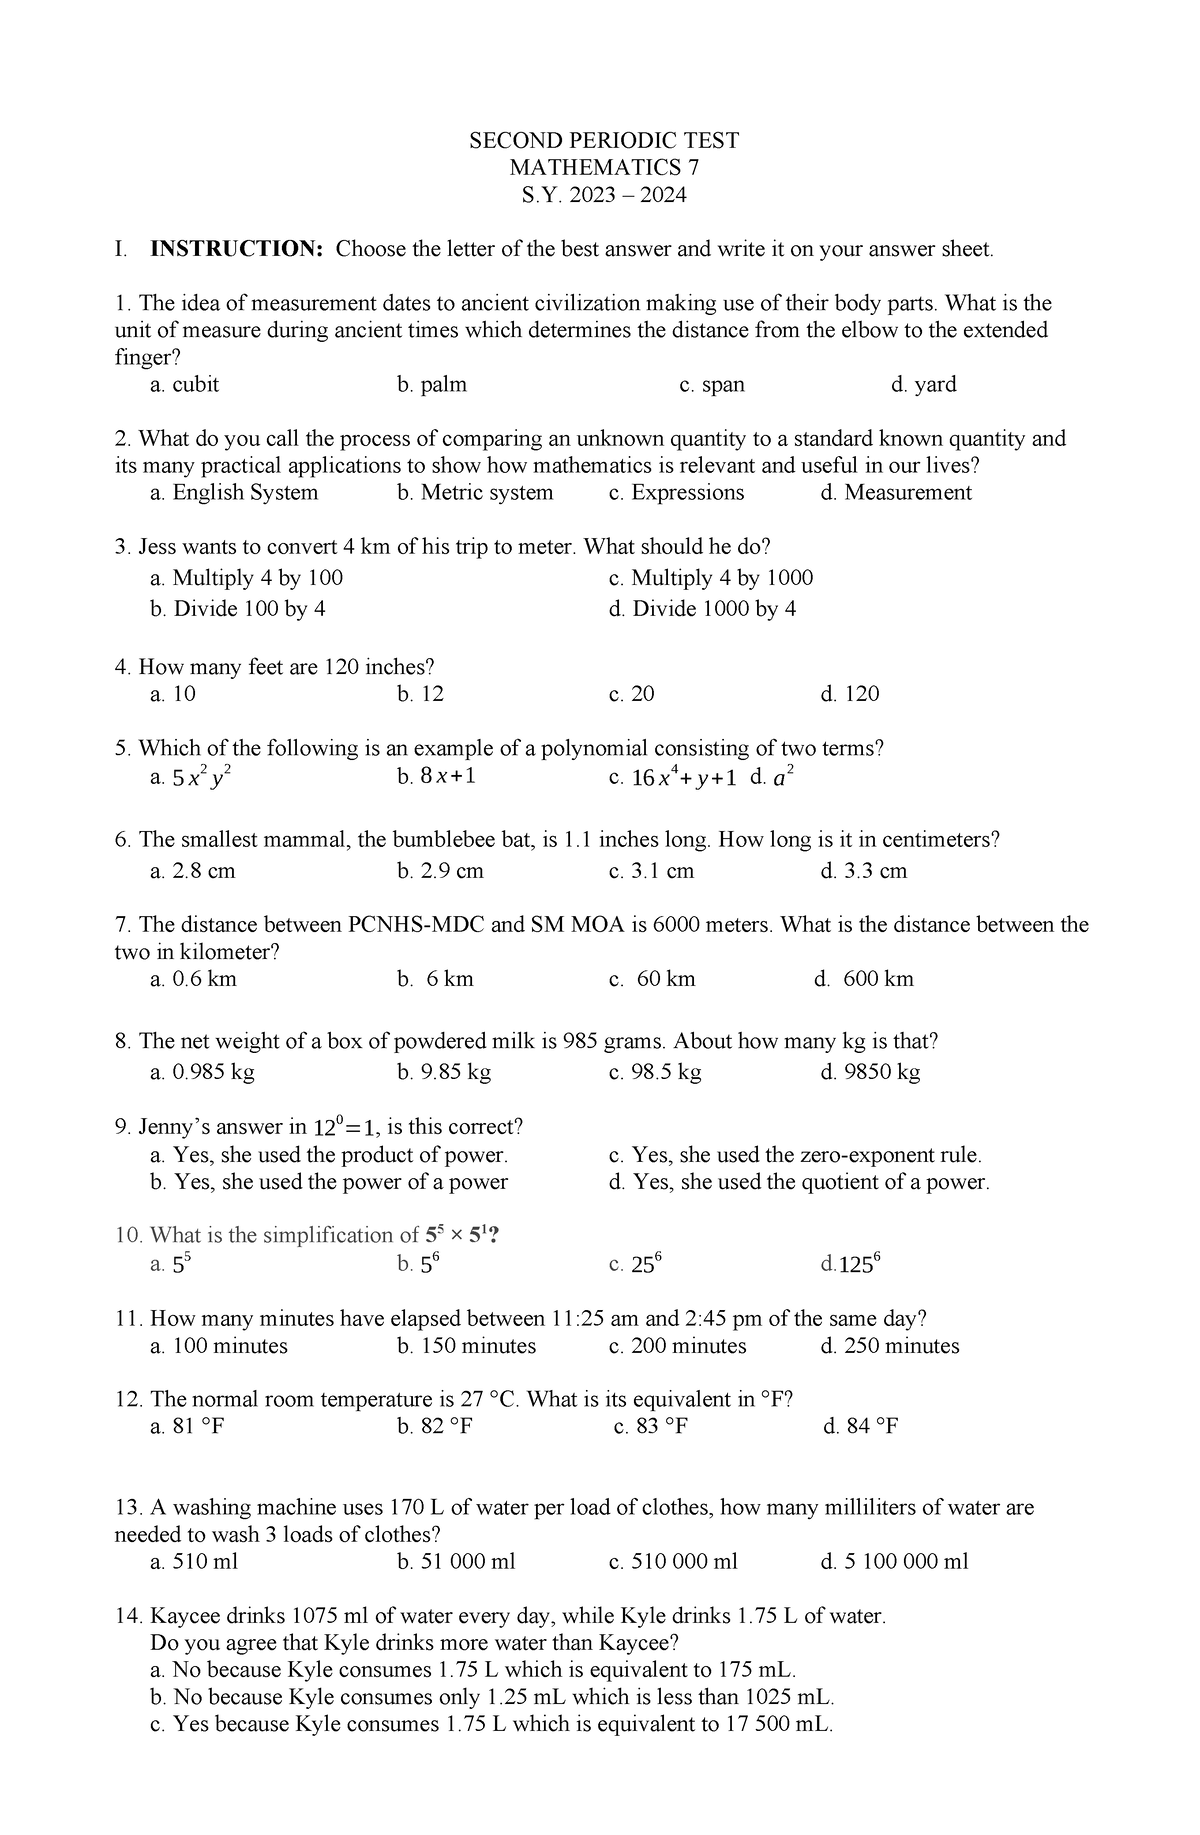 2nd-Perodical Test-Math-7 - SECOND PERIODIC TEST MATHEMATICS 7 S. 2023 ...